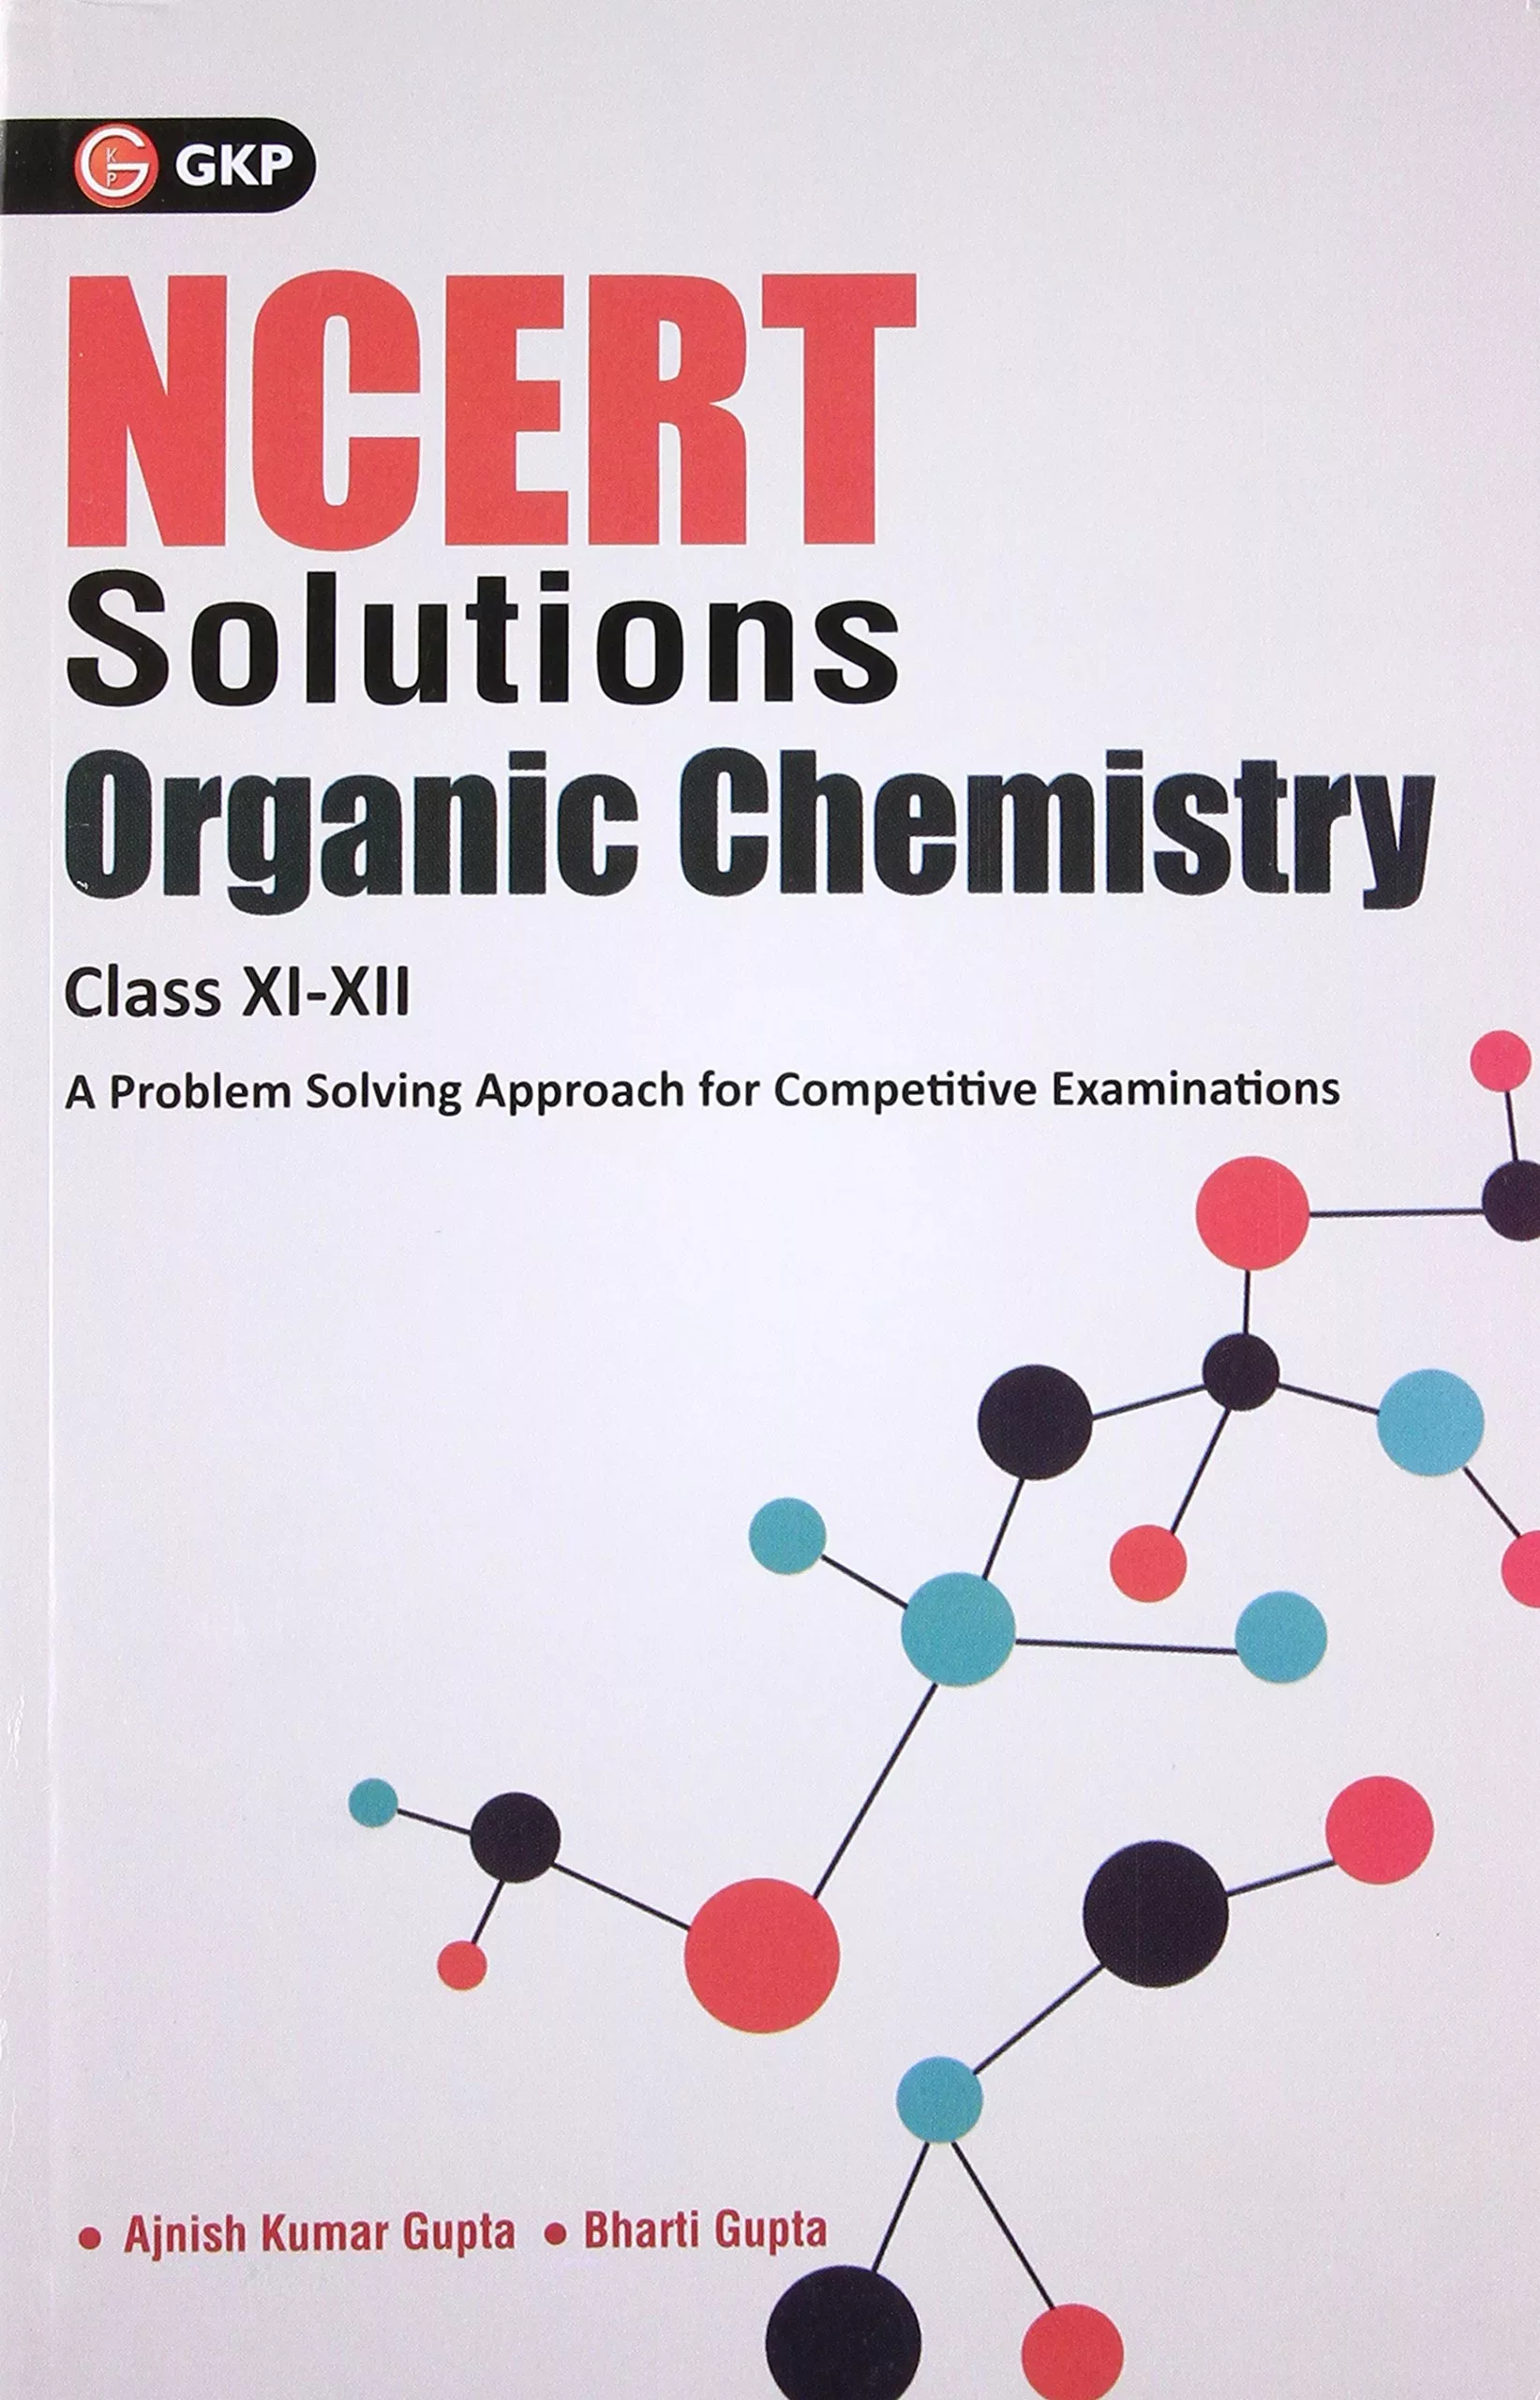 Class　Bharti　Organic　Gupta　Gupta　Buy　Chemistry　Ajnish　By　XI-XII　NCERT　Solutions　Publications　Kumar　GK